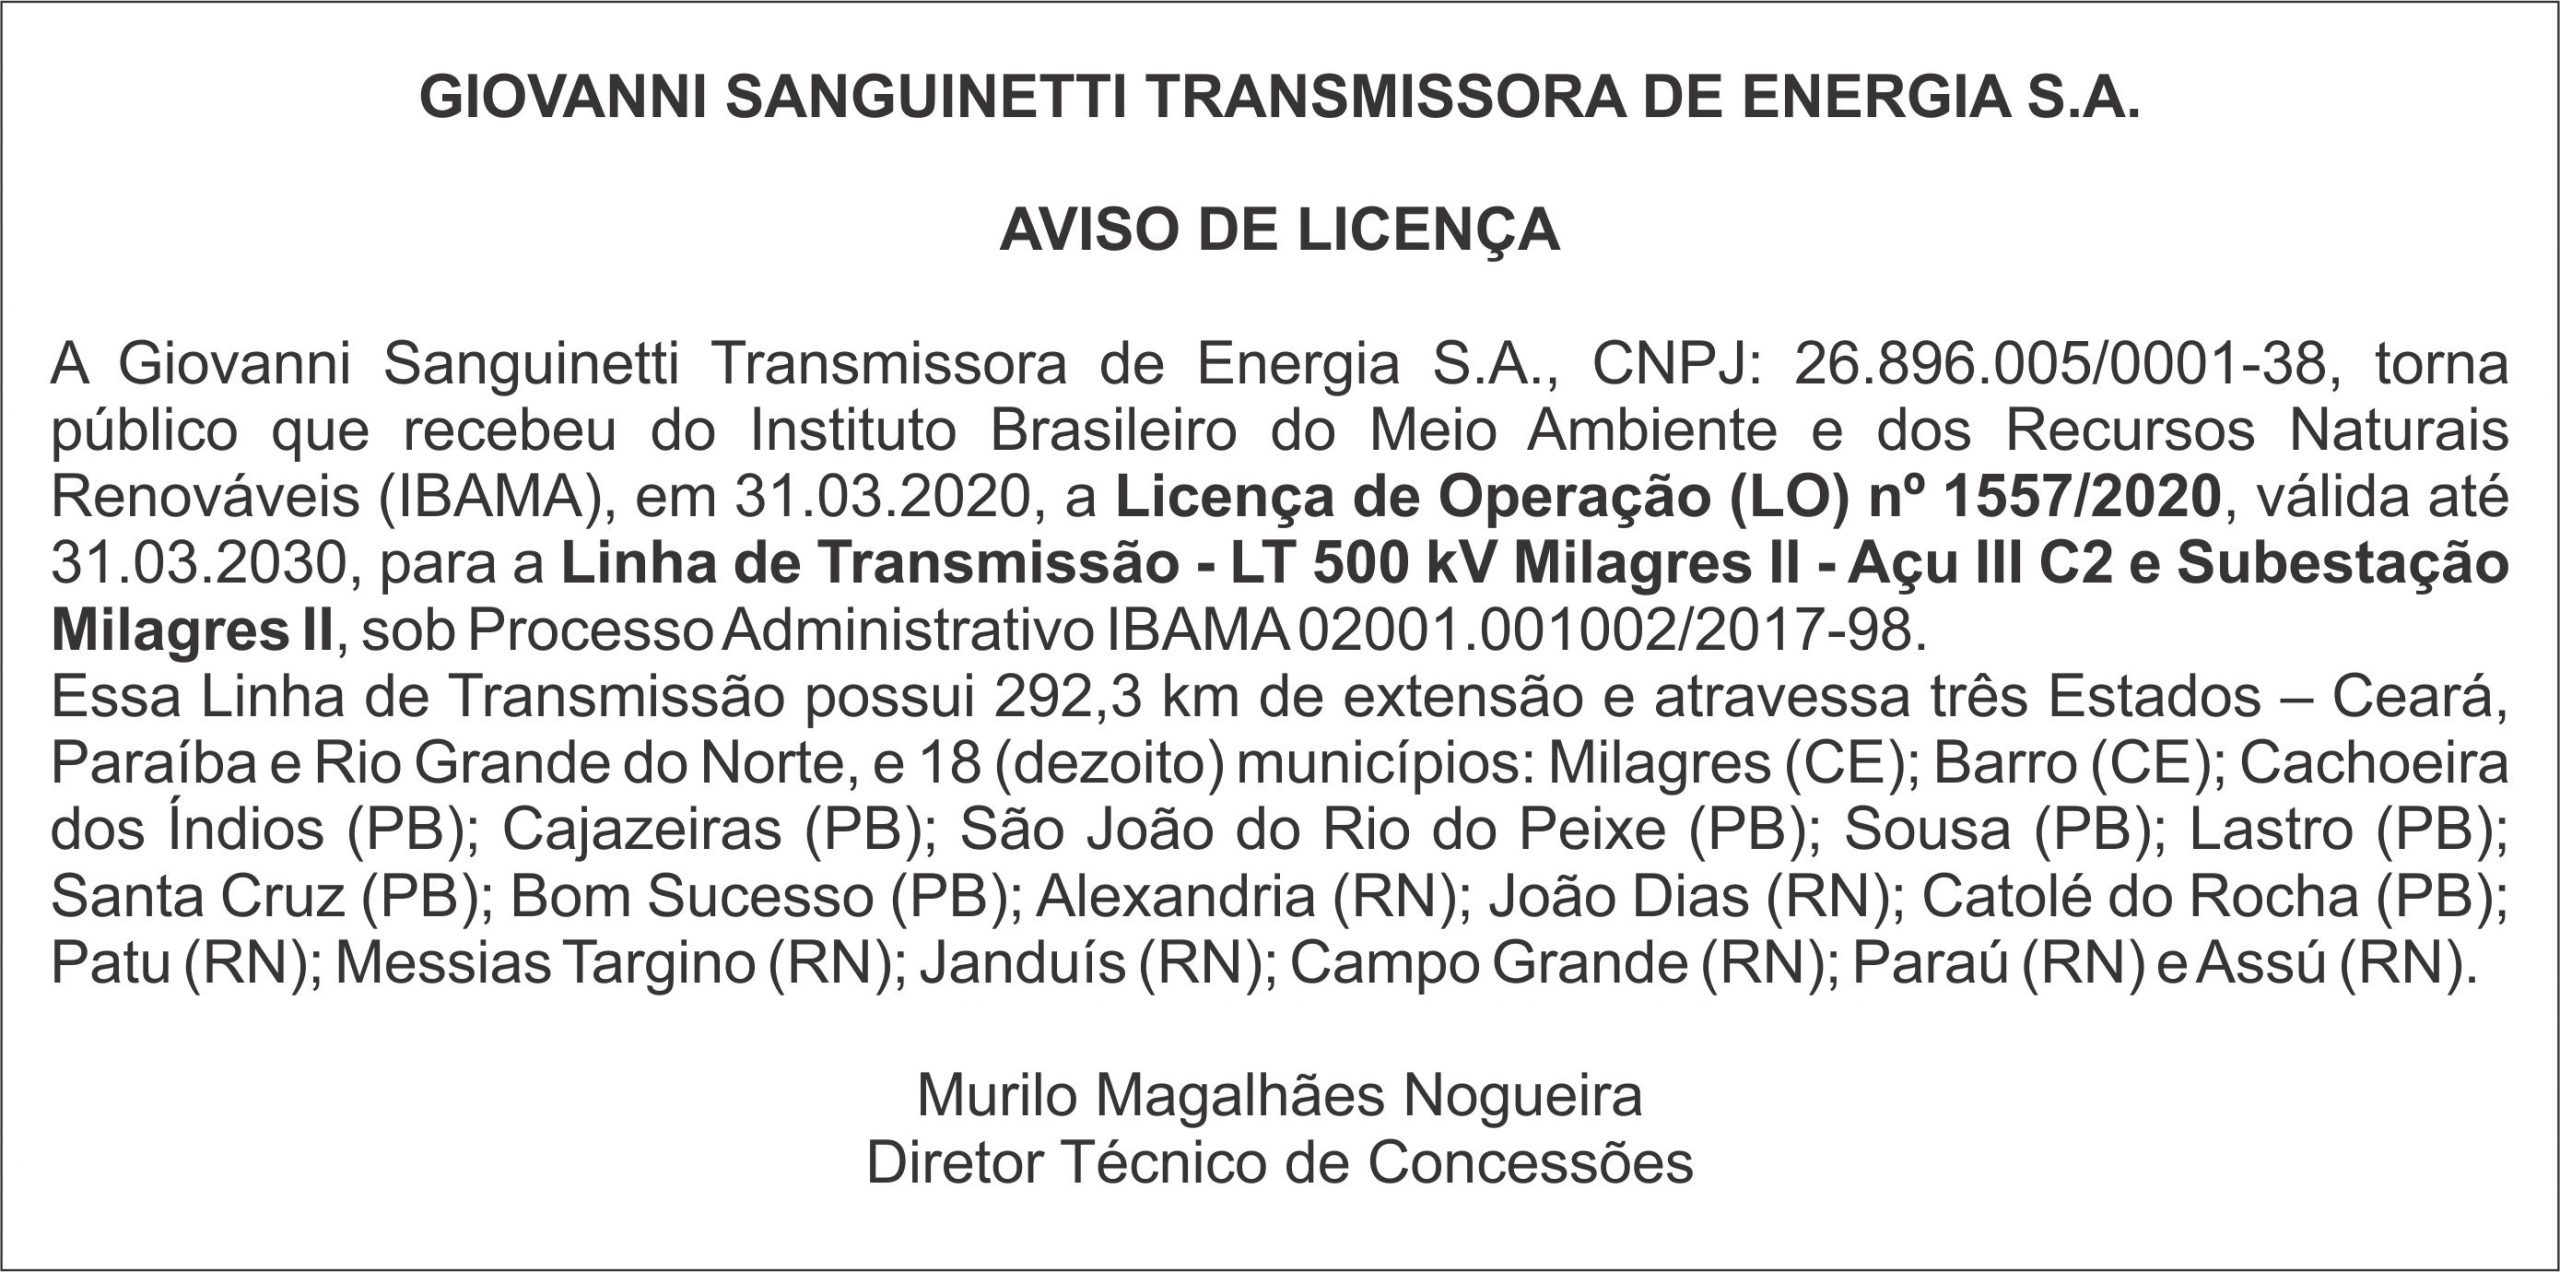 GIOVANNI SANGUINETTI TRANSMISSORA DE ENERGIA S.A. – AVISO DE LICENÇA